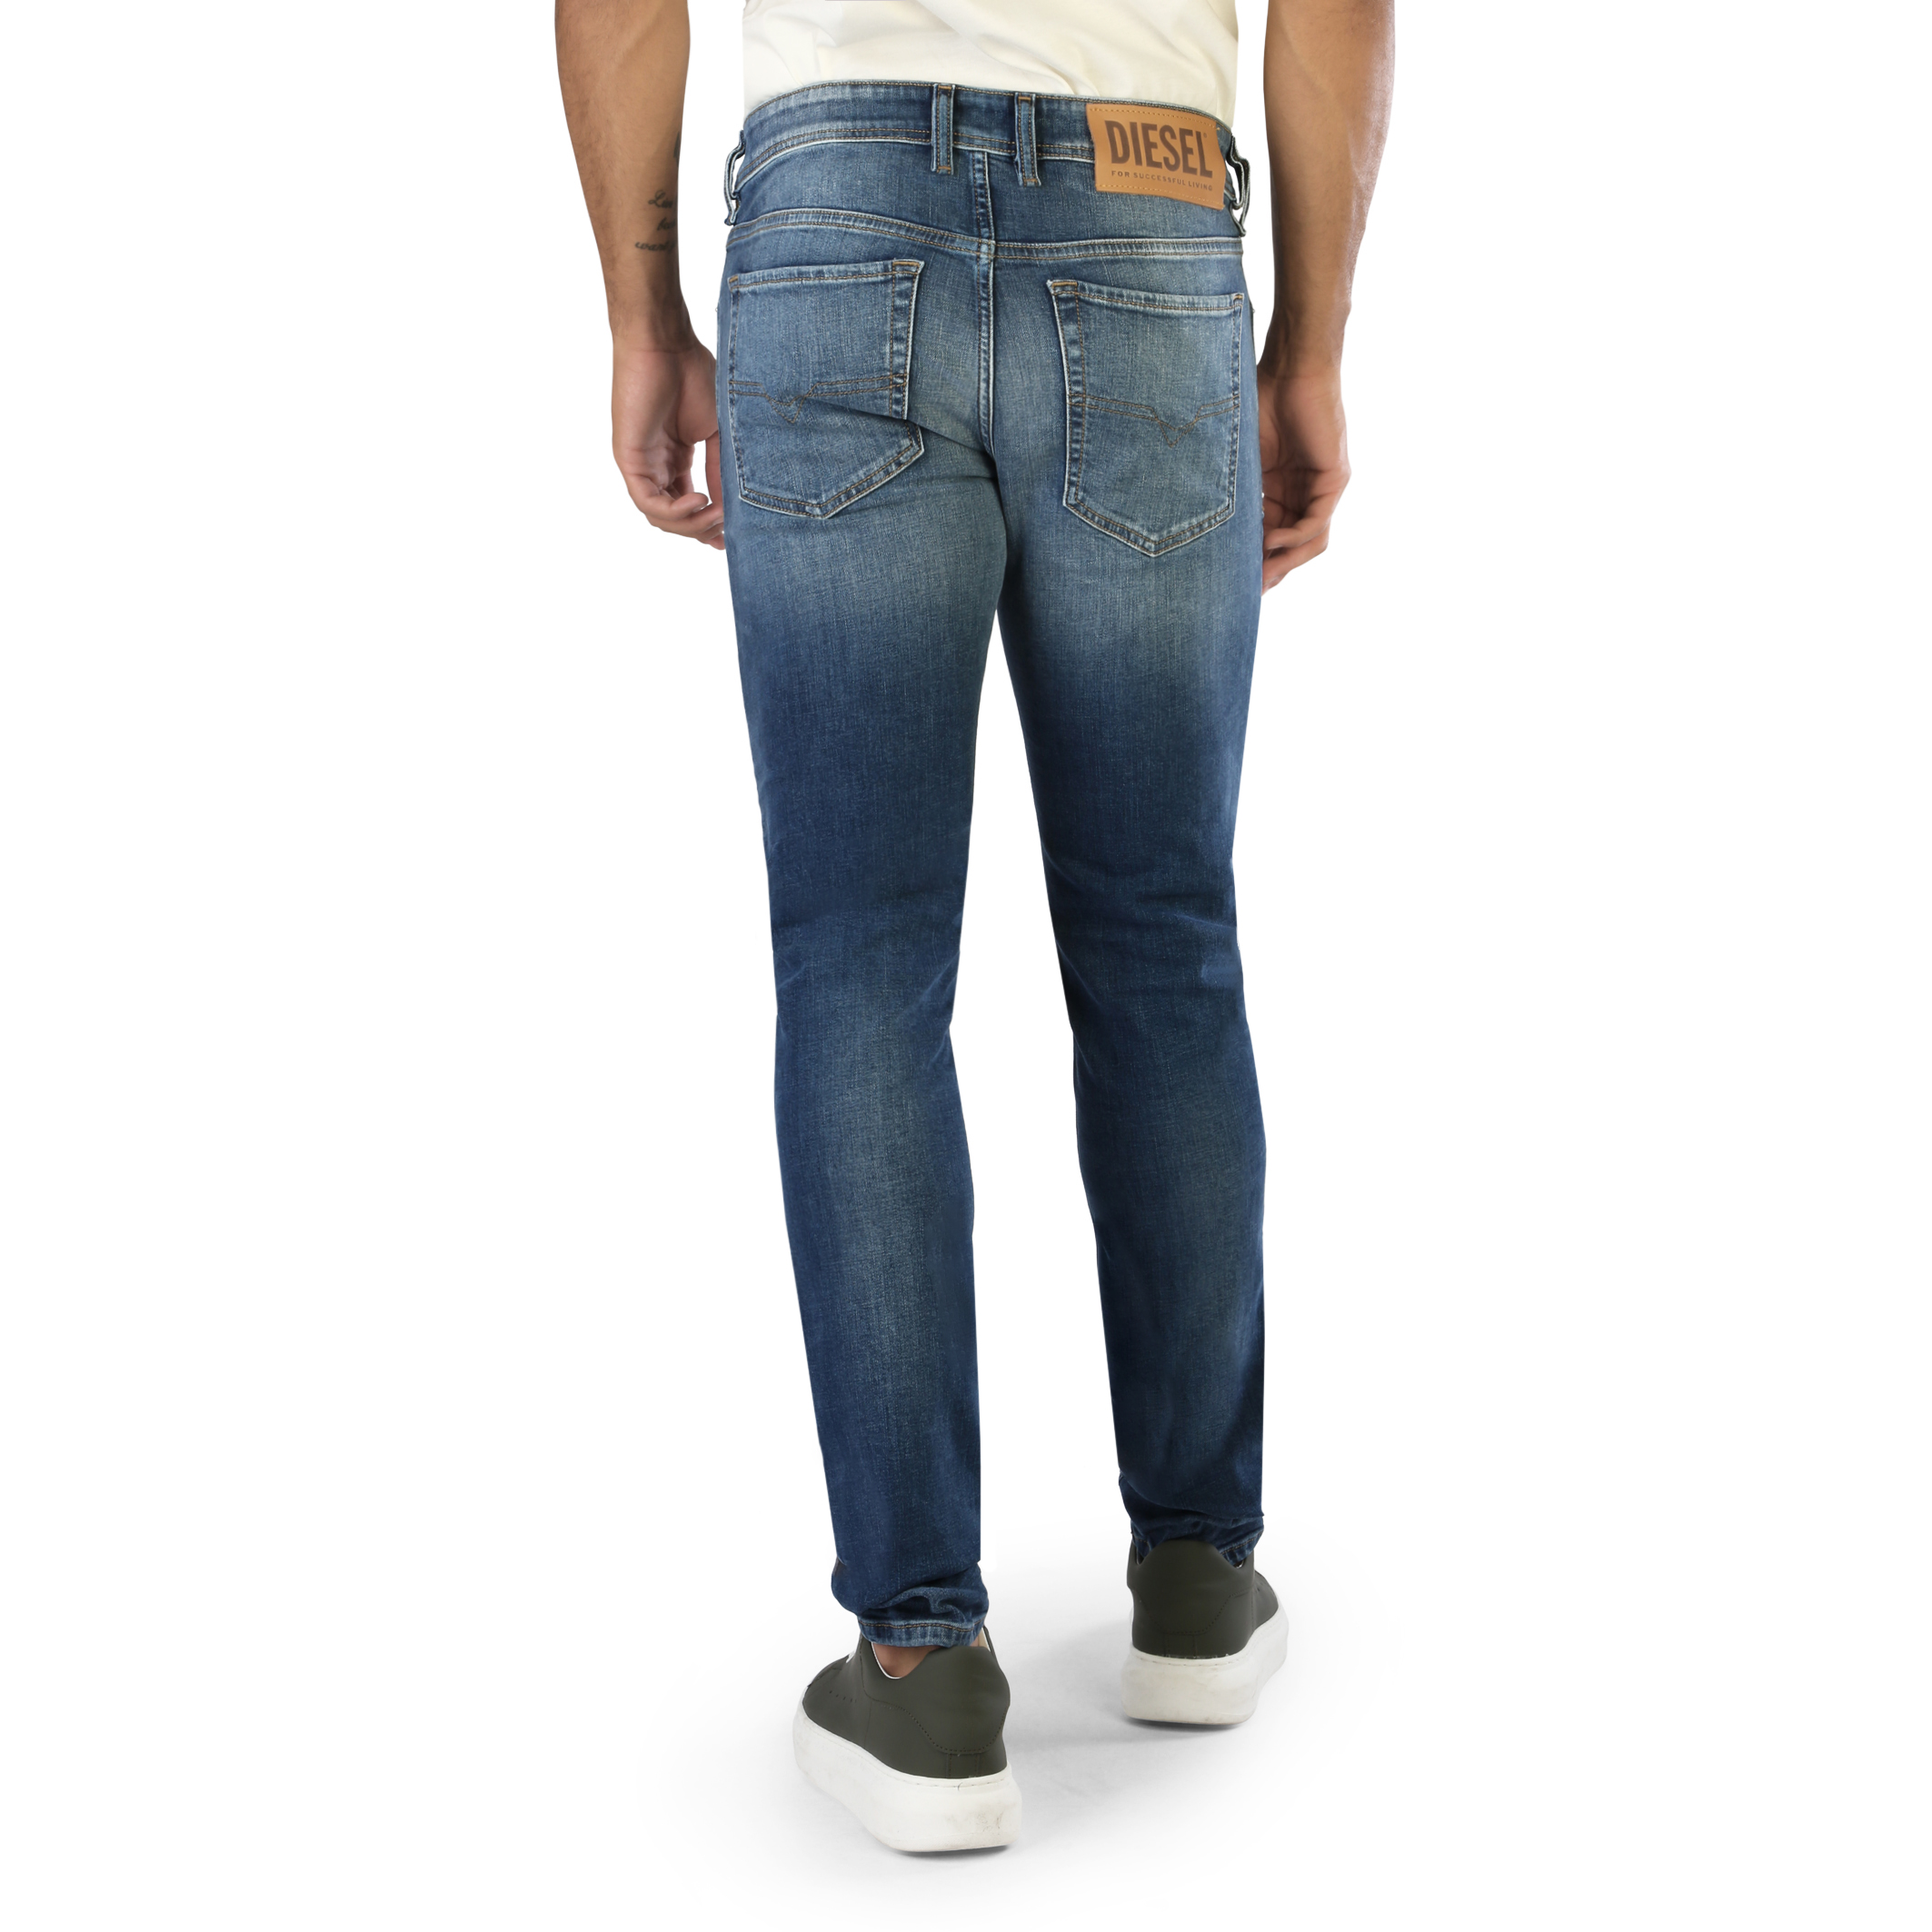 Diesel Blue Jeans for Men - SLEENKER-X_L32_09A60